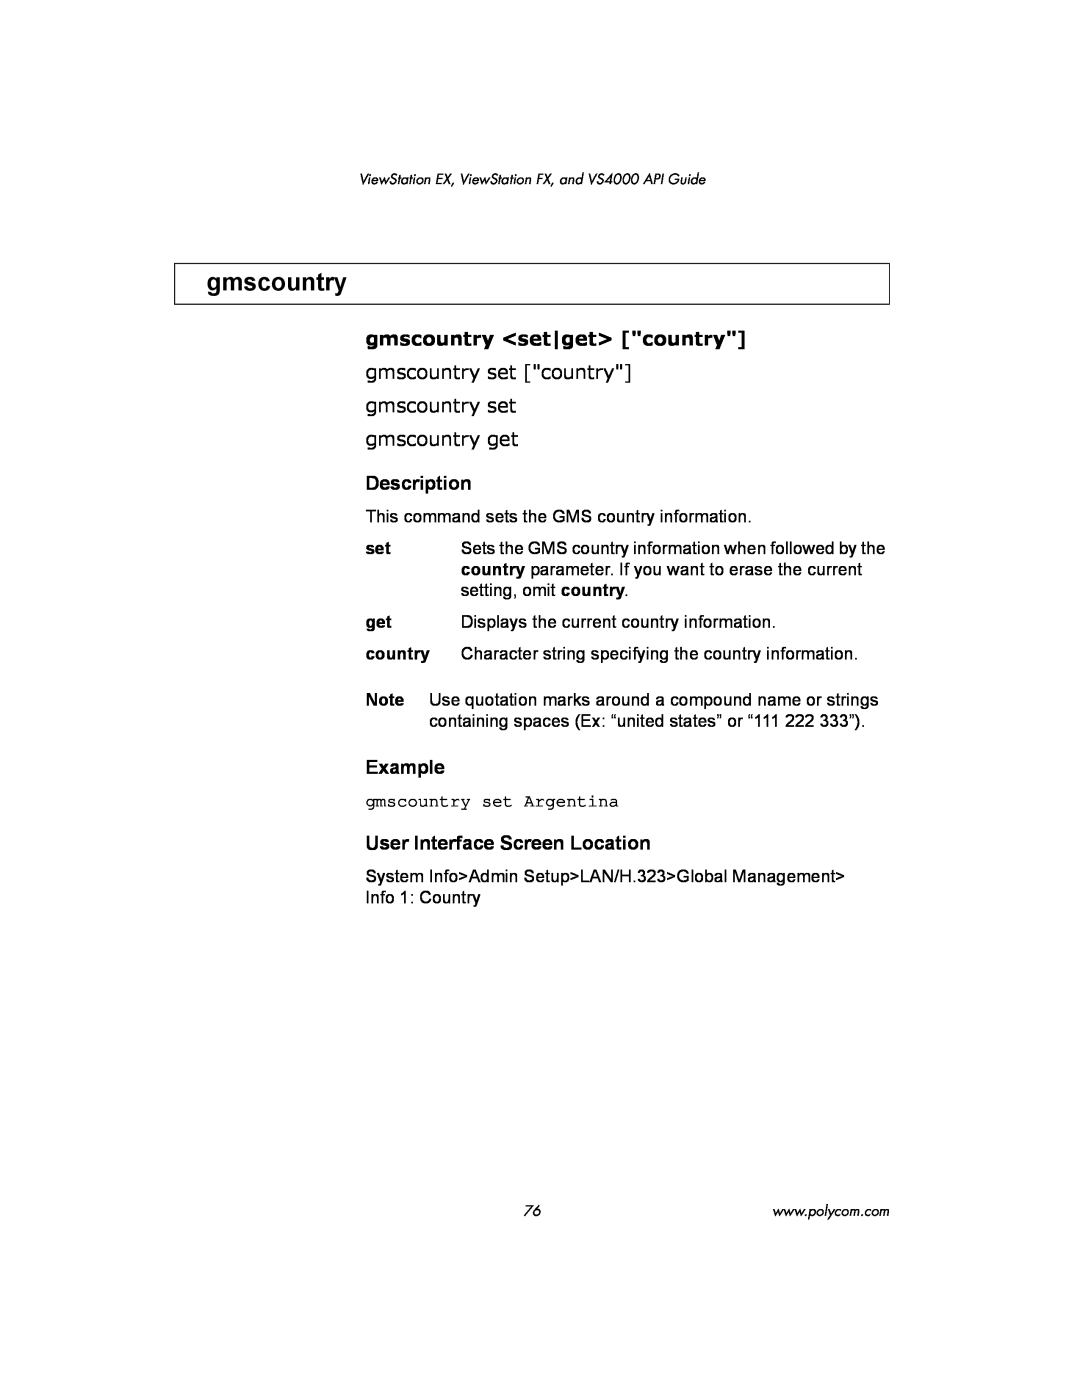 Polycom VIEWSTATION EX manual gmscountry get, Description, Example, User Interface Screen Location 